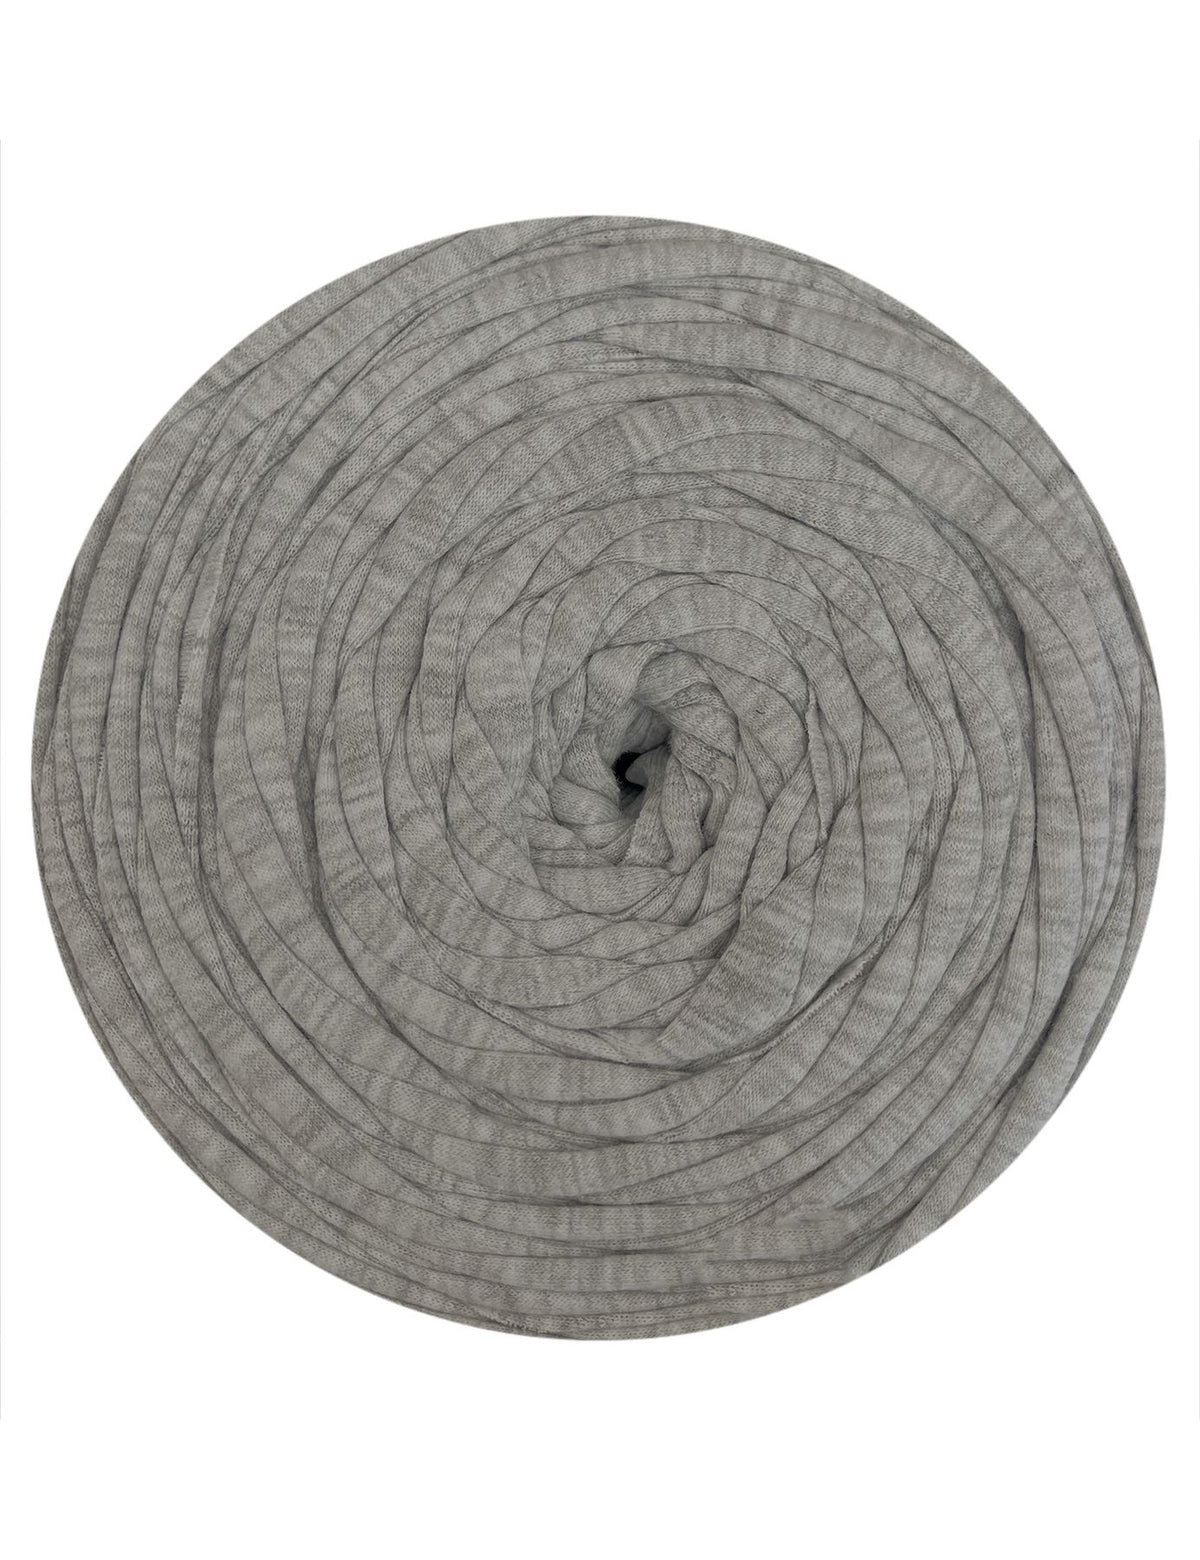 Anchor grey t-shirt yarn (100-120m)